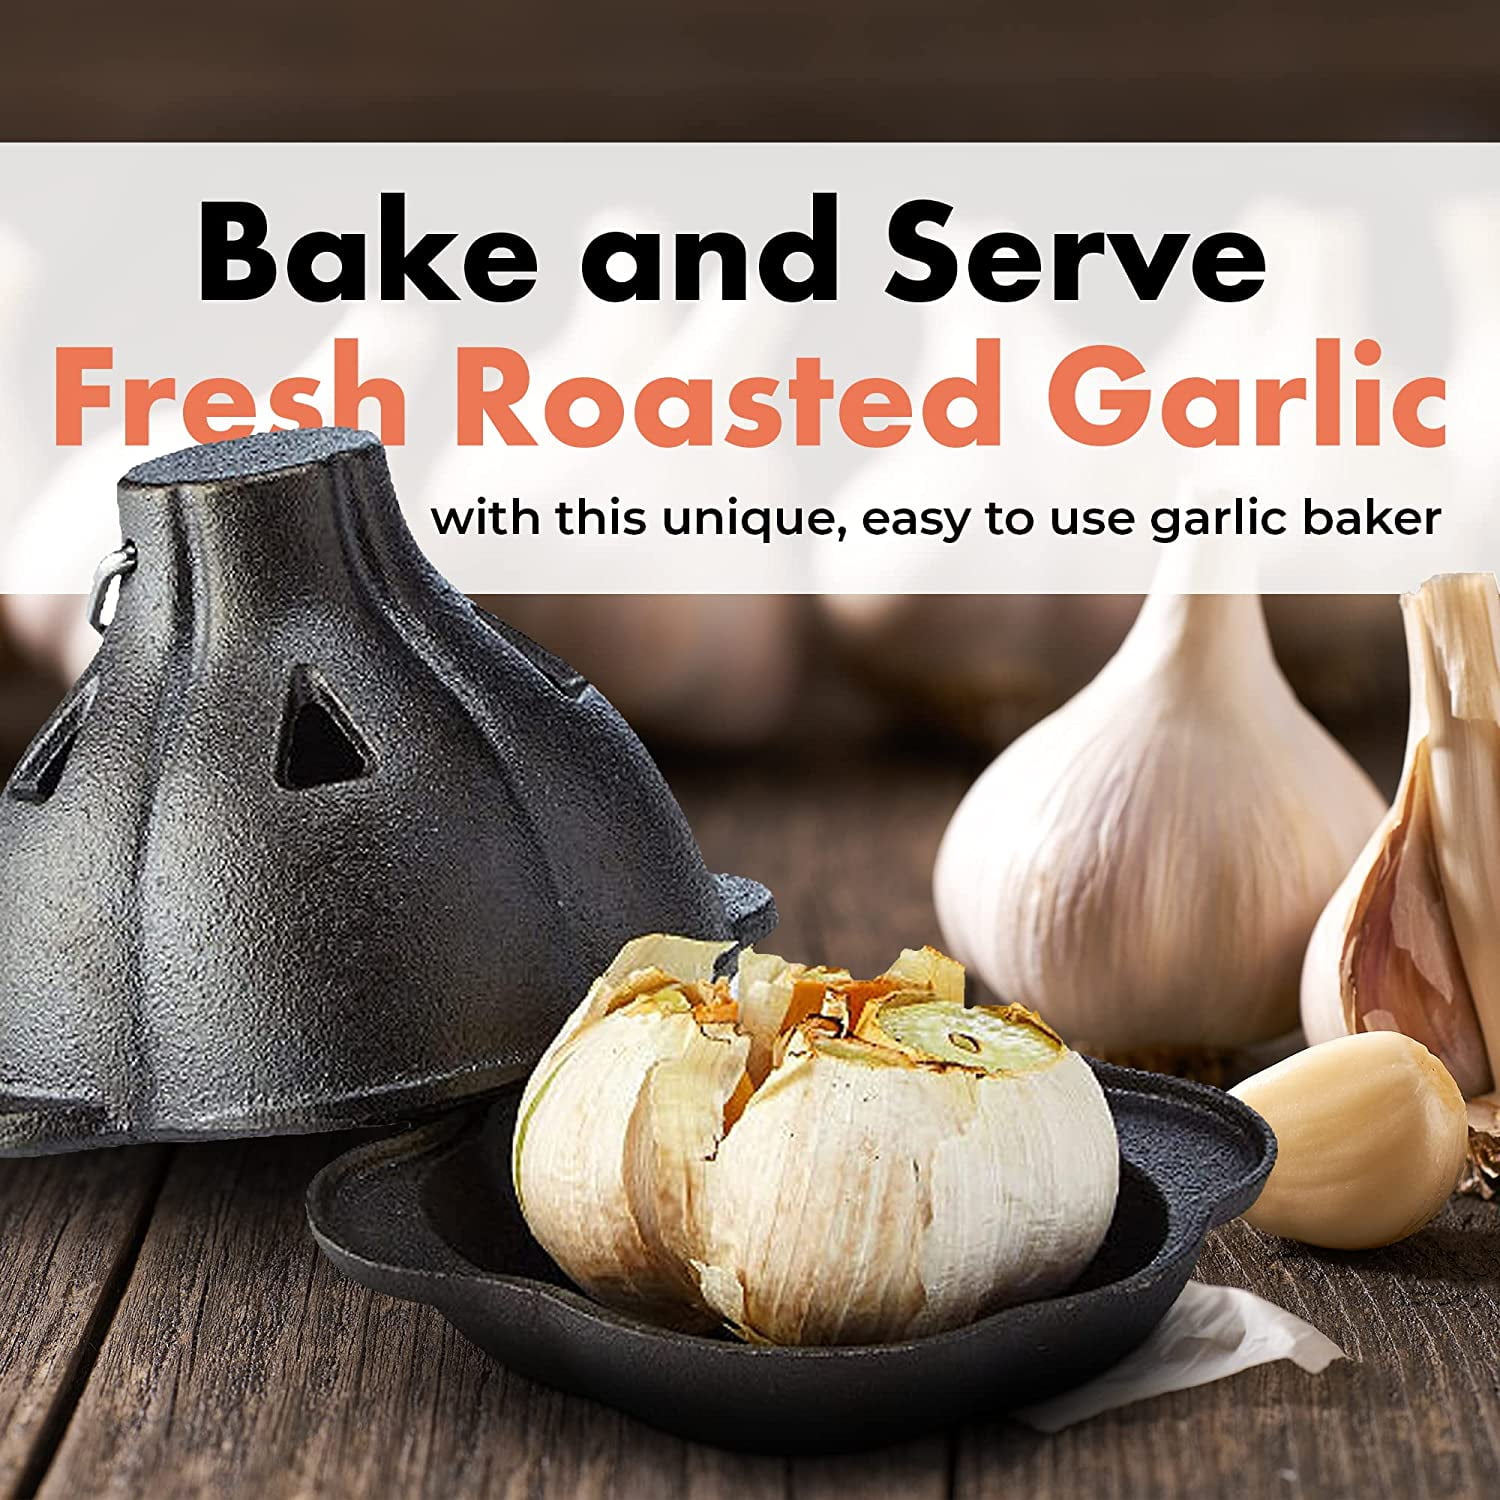 Quick question: should I season my cast-iron garlic roaster any